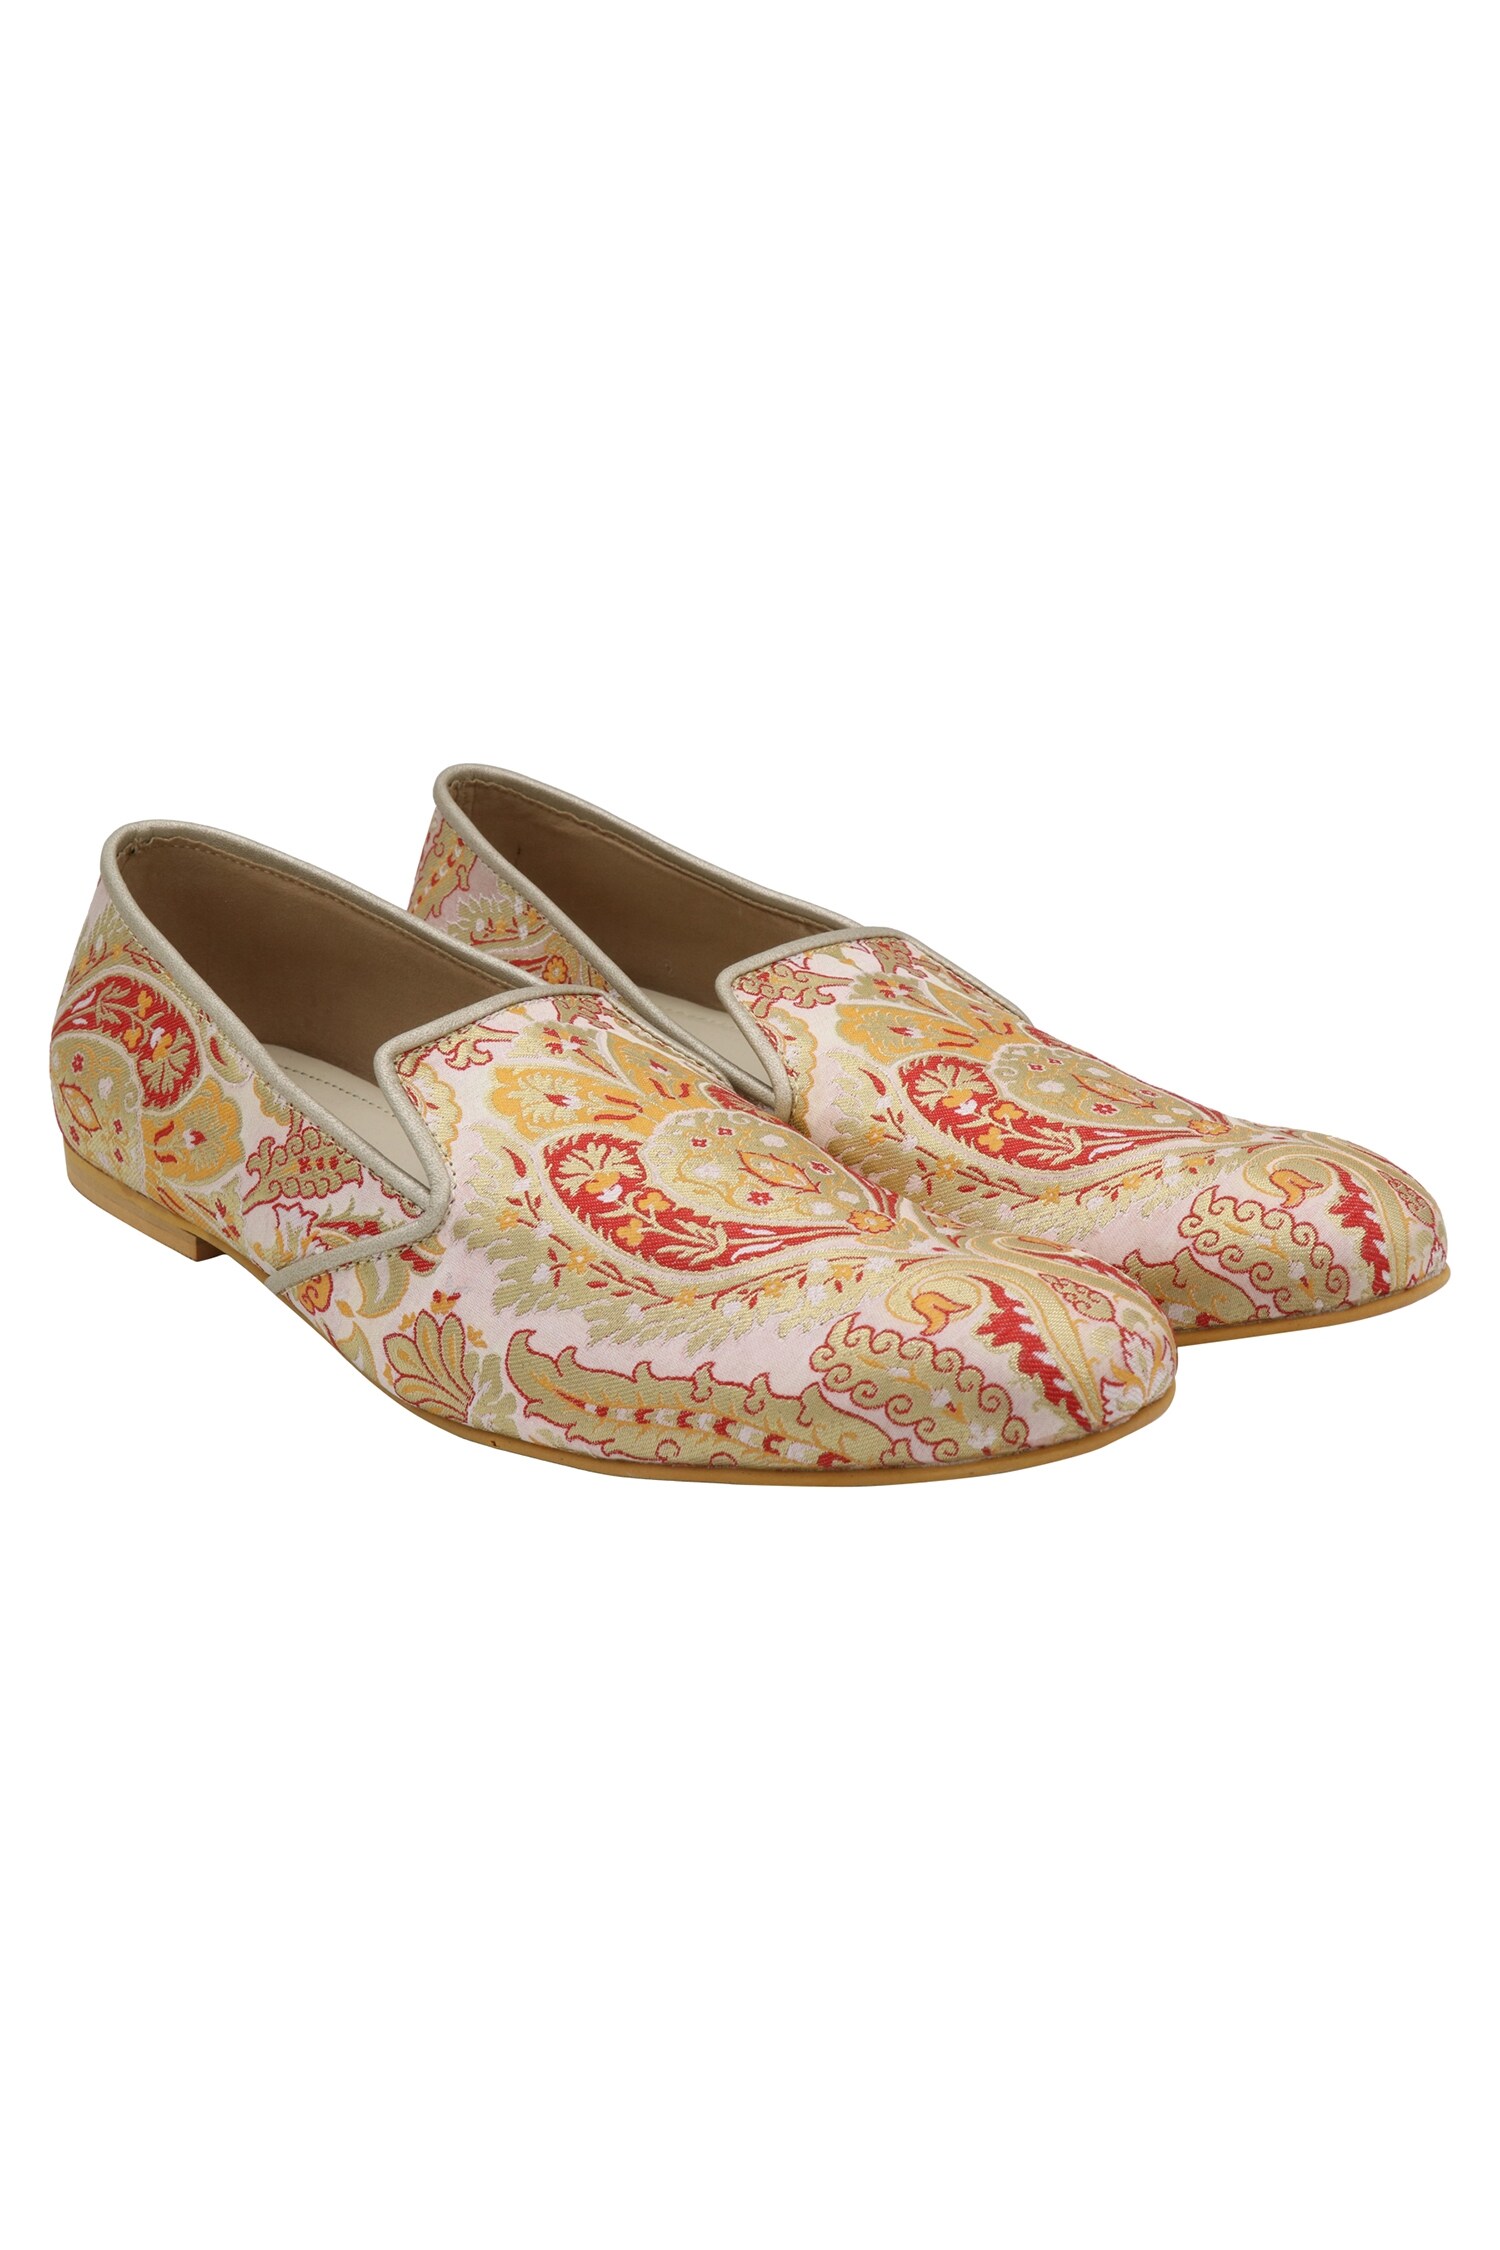 Veruschka by Payal Kothari Pink Brocade Loafers